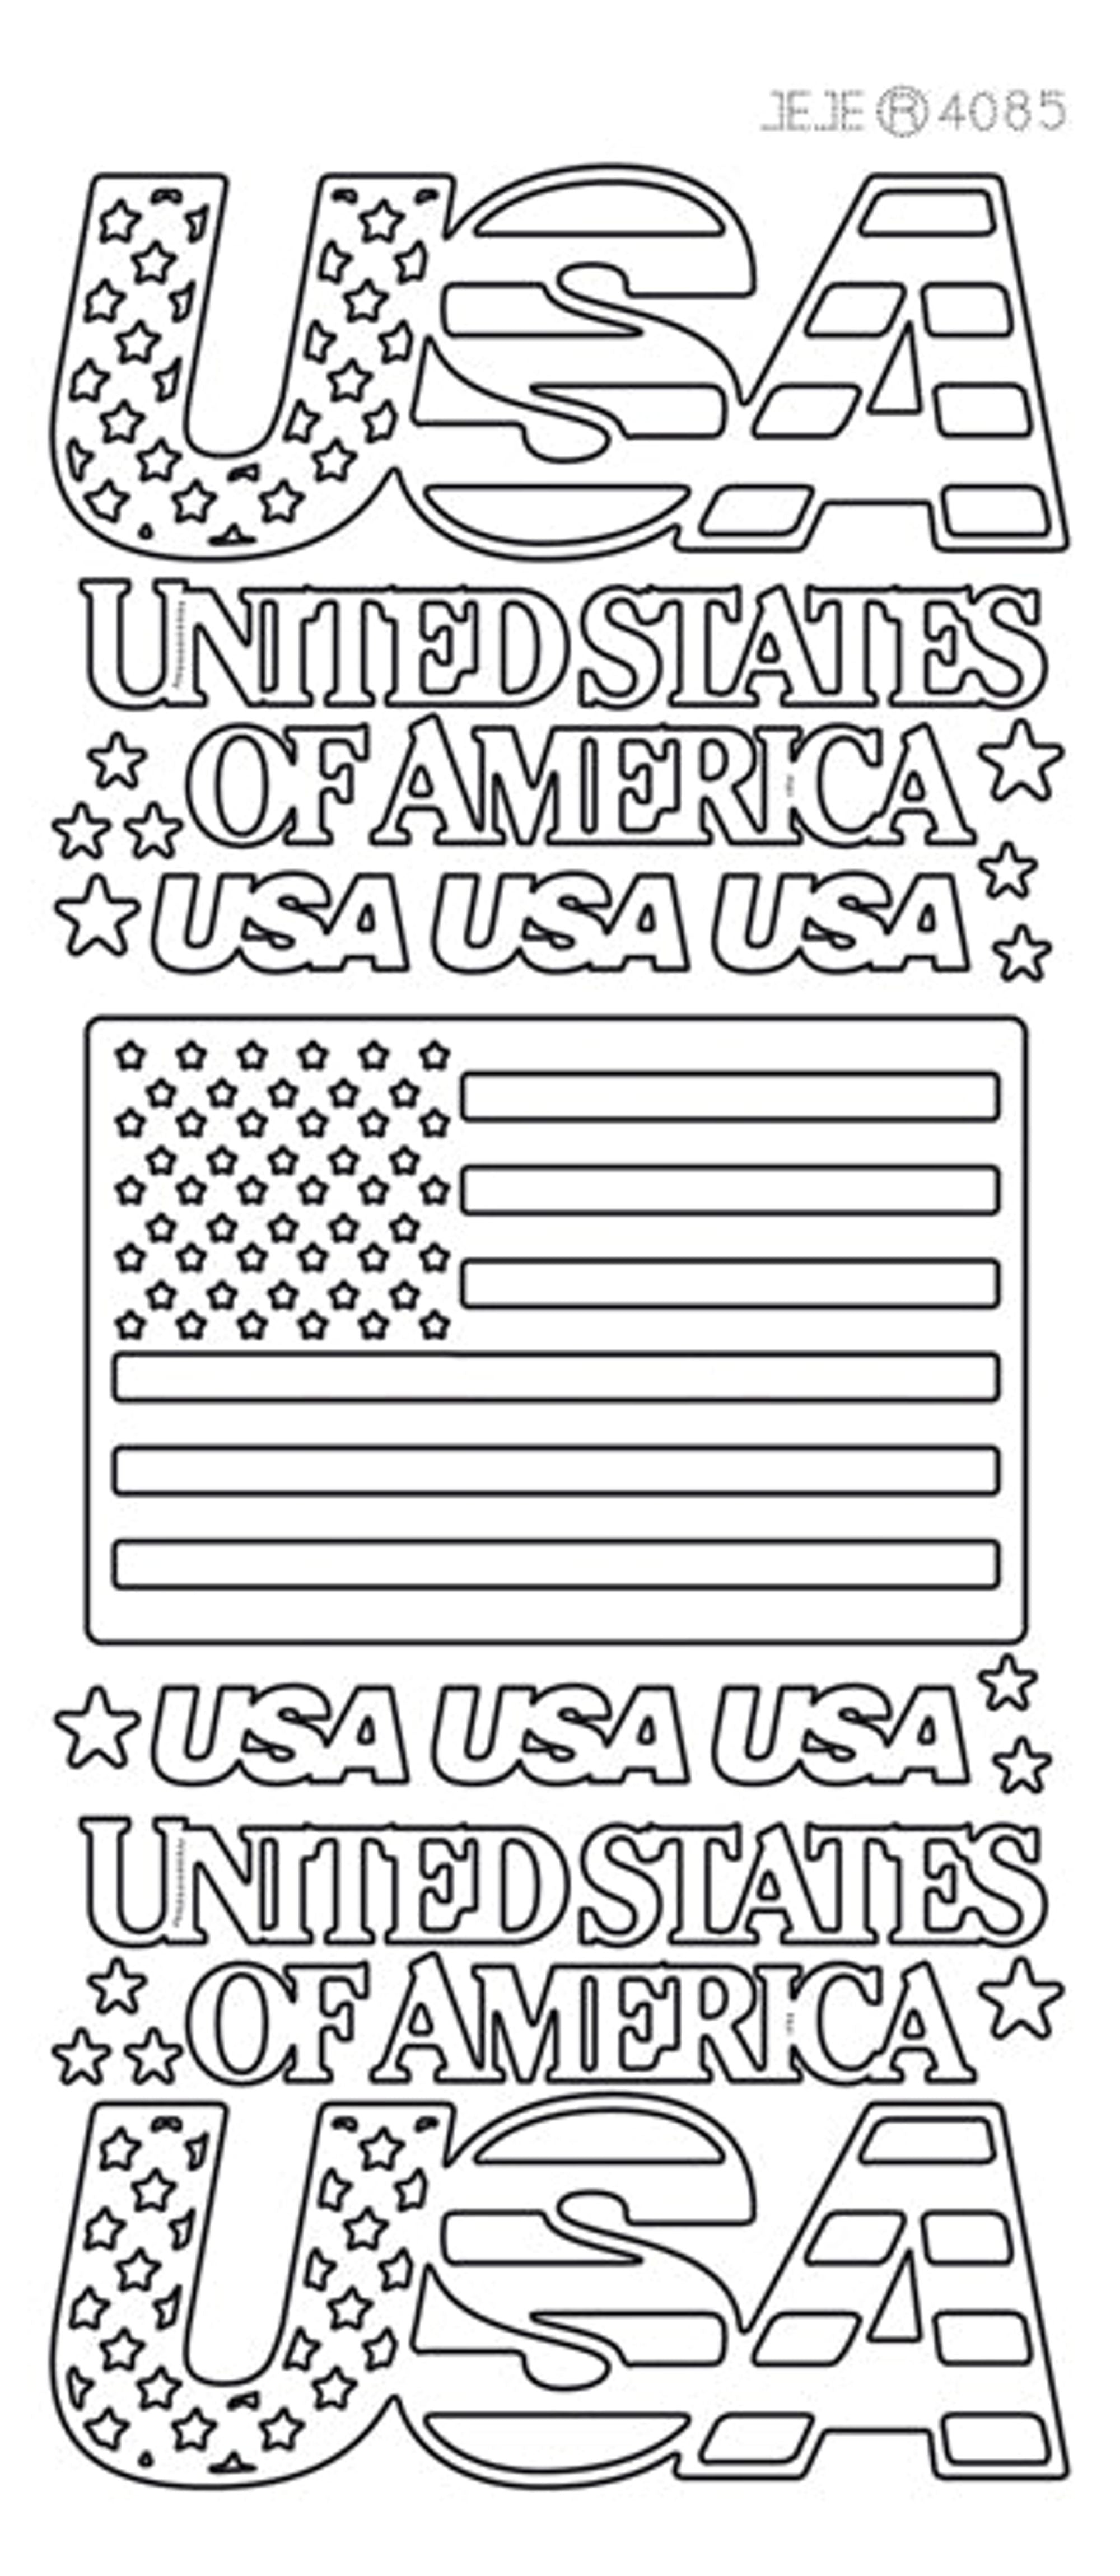 Peel-Off Stickers - USA